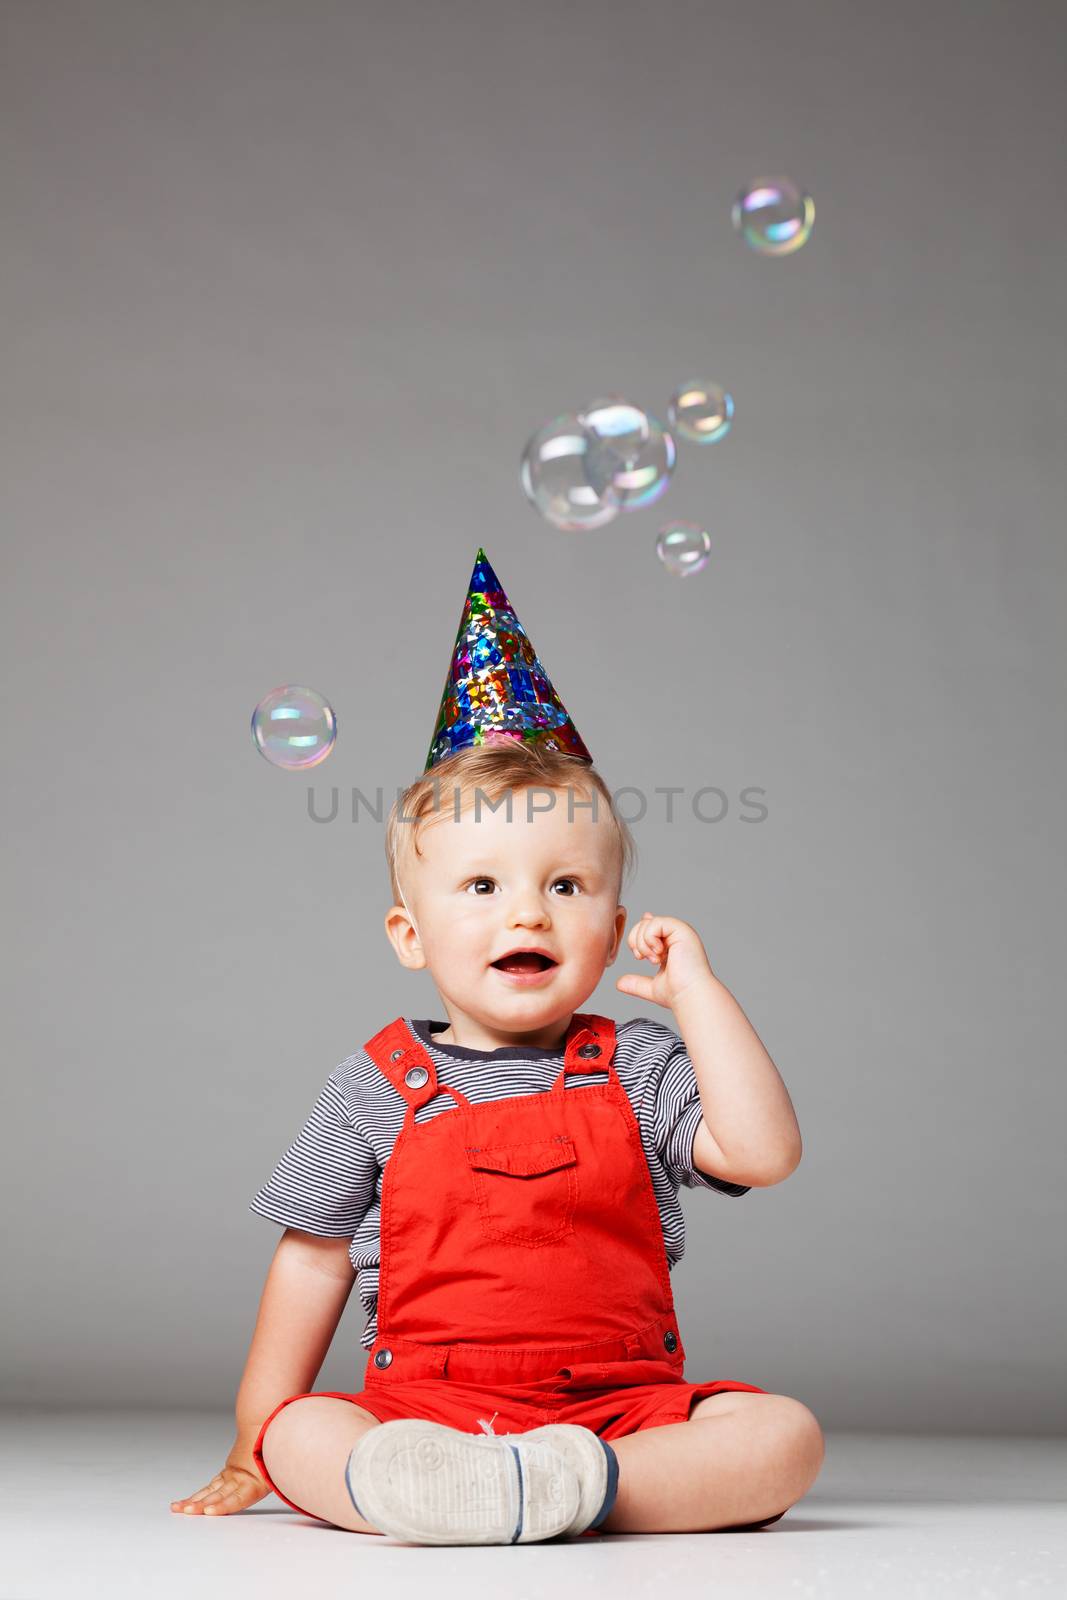 baby birthday boy with balloons by kokimk